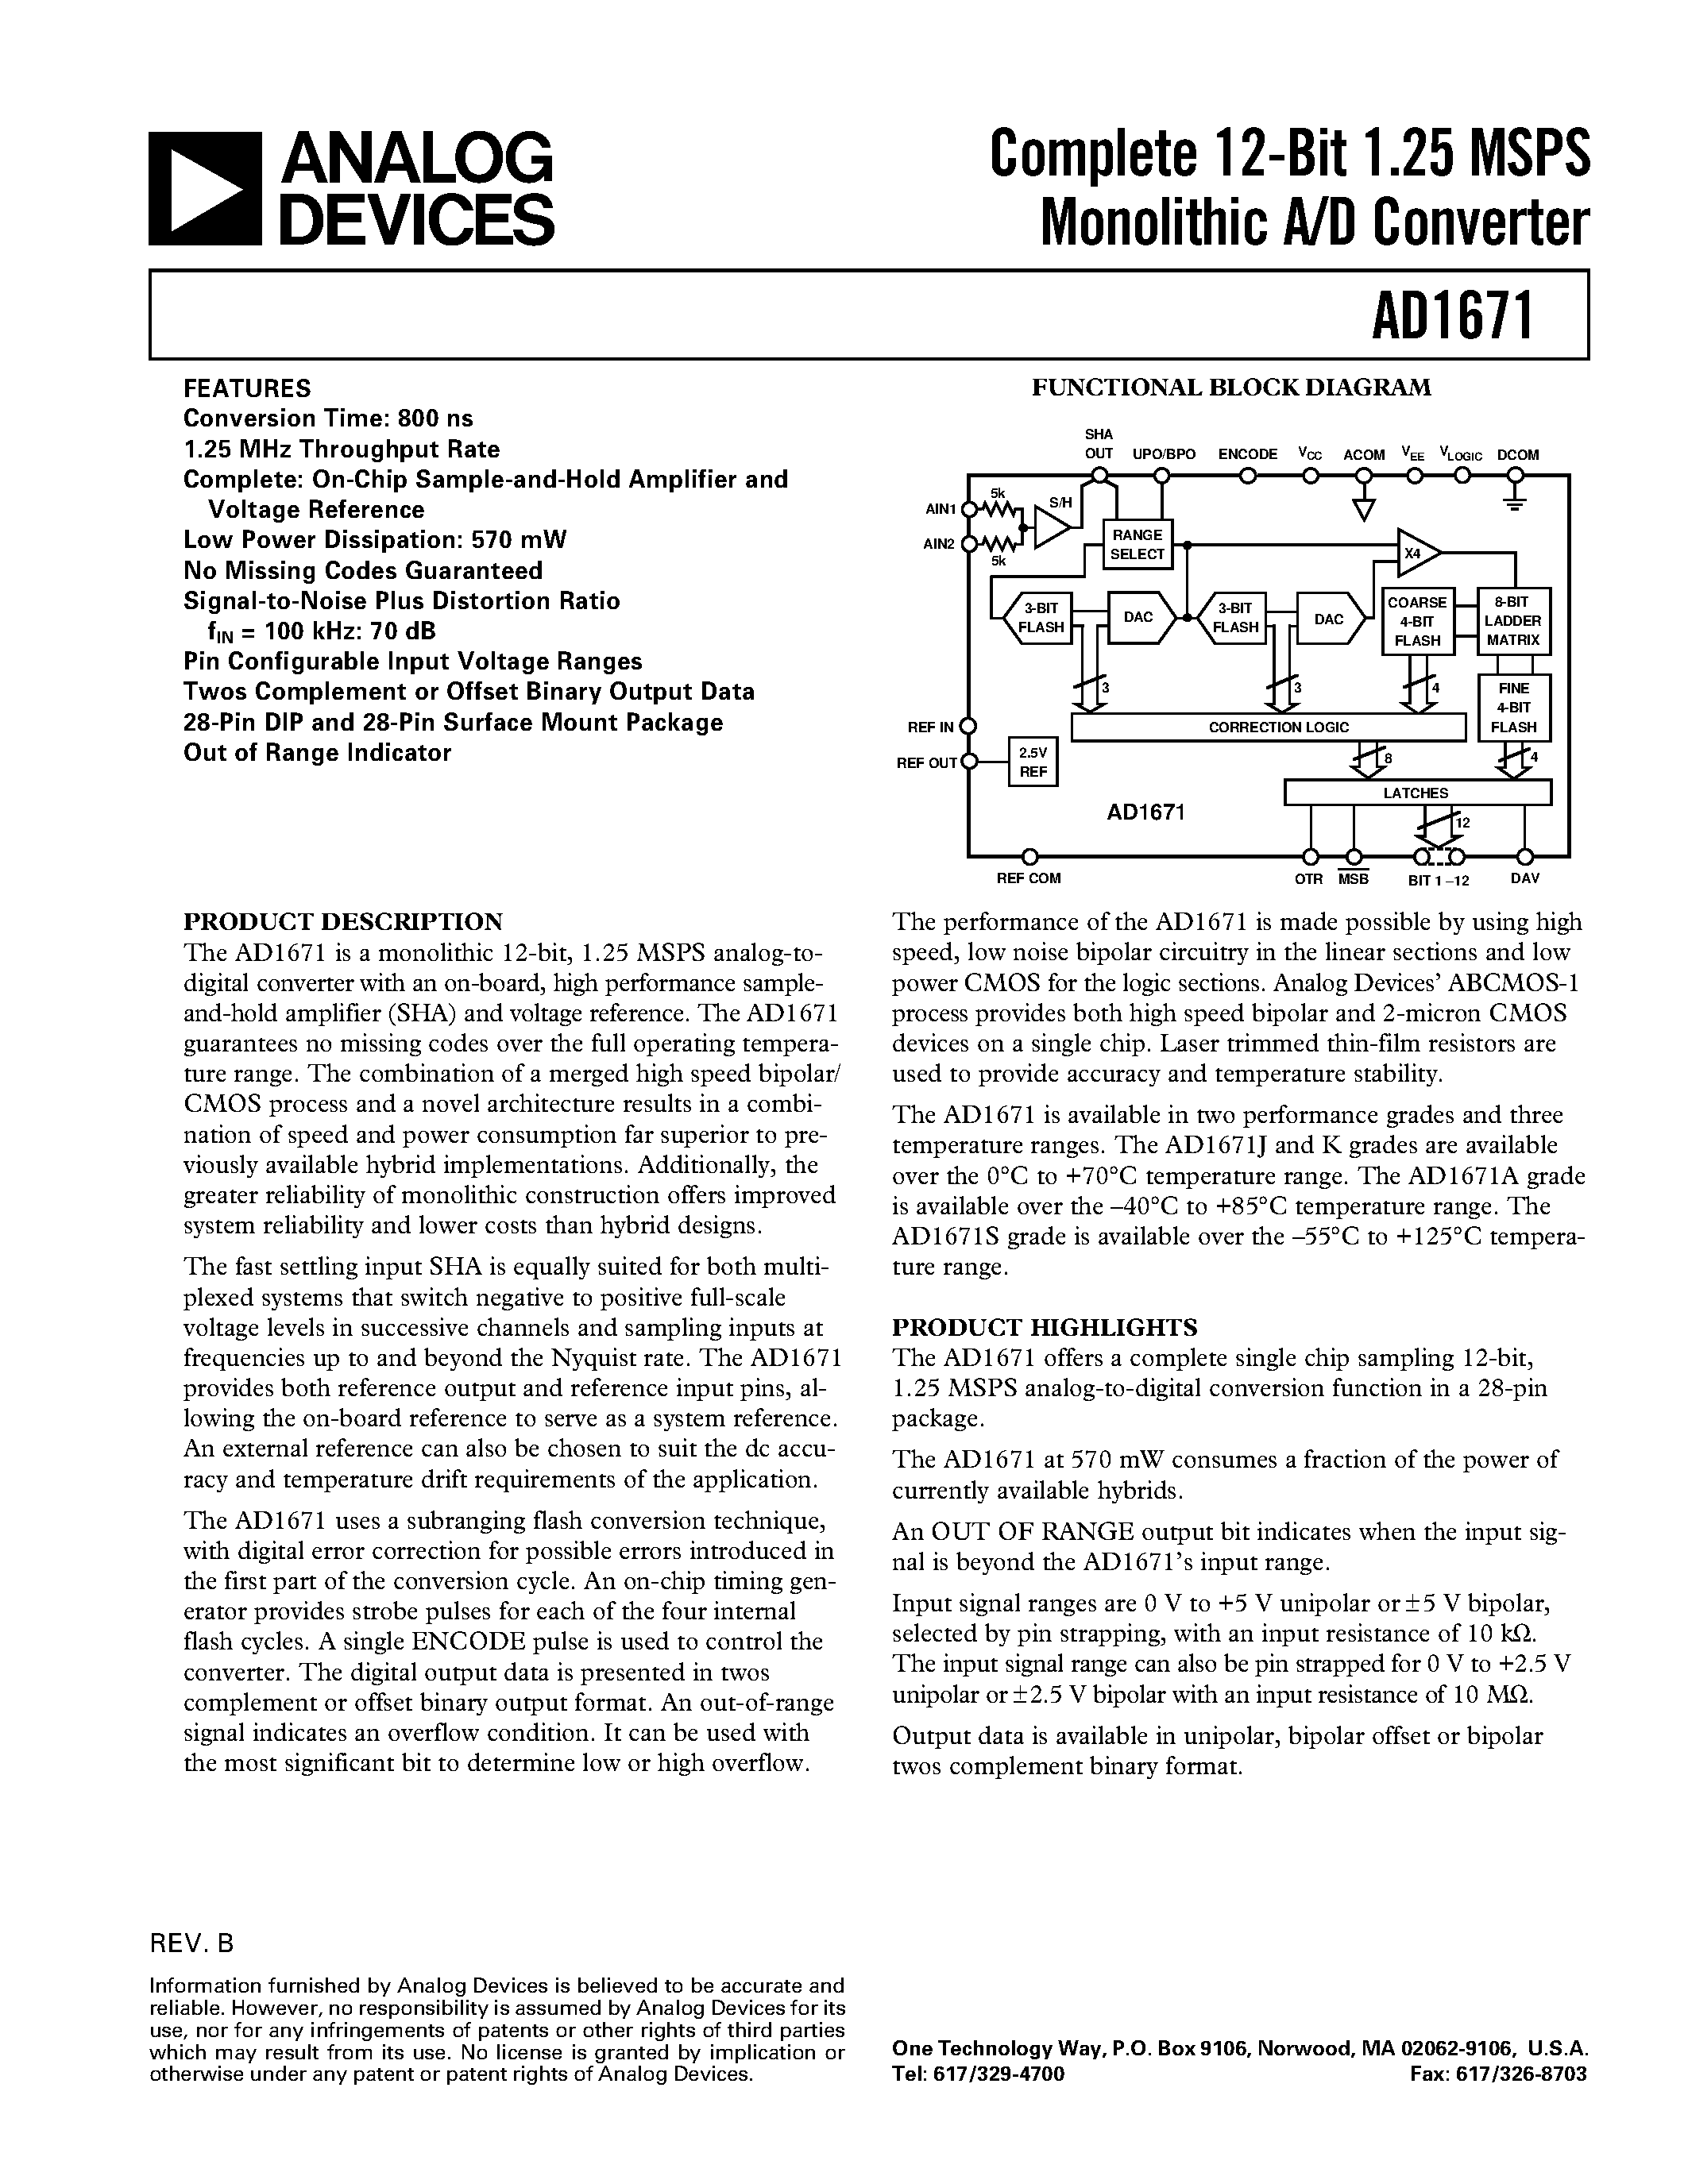 Datasheet AD1671JQ - Complete 12-Bit 1.25 MSPS Monolithic A/D Converter page 1